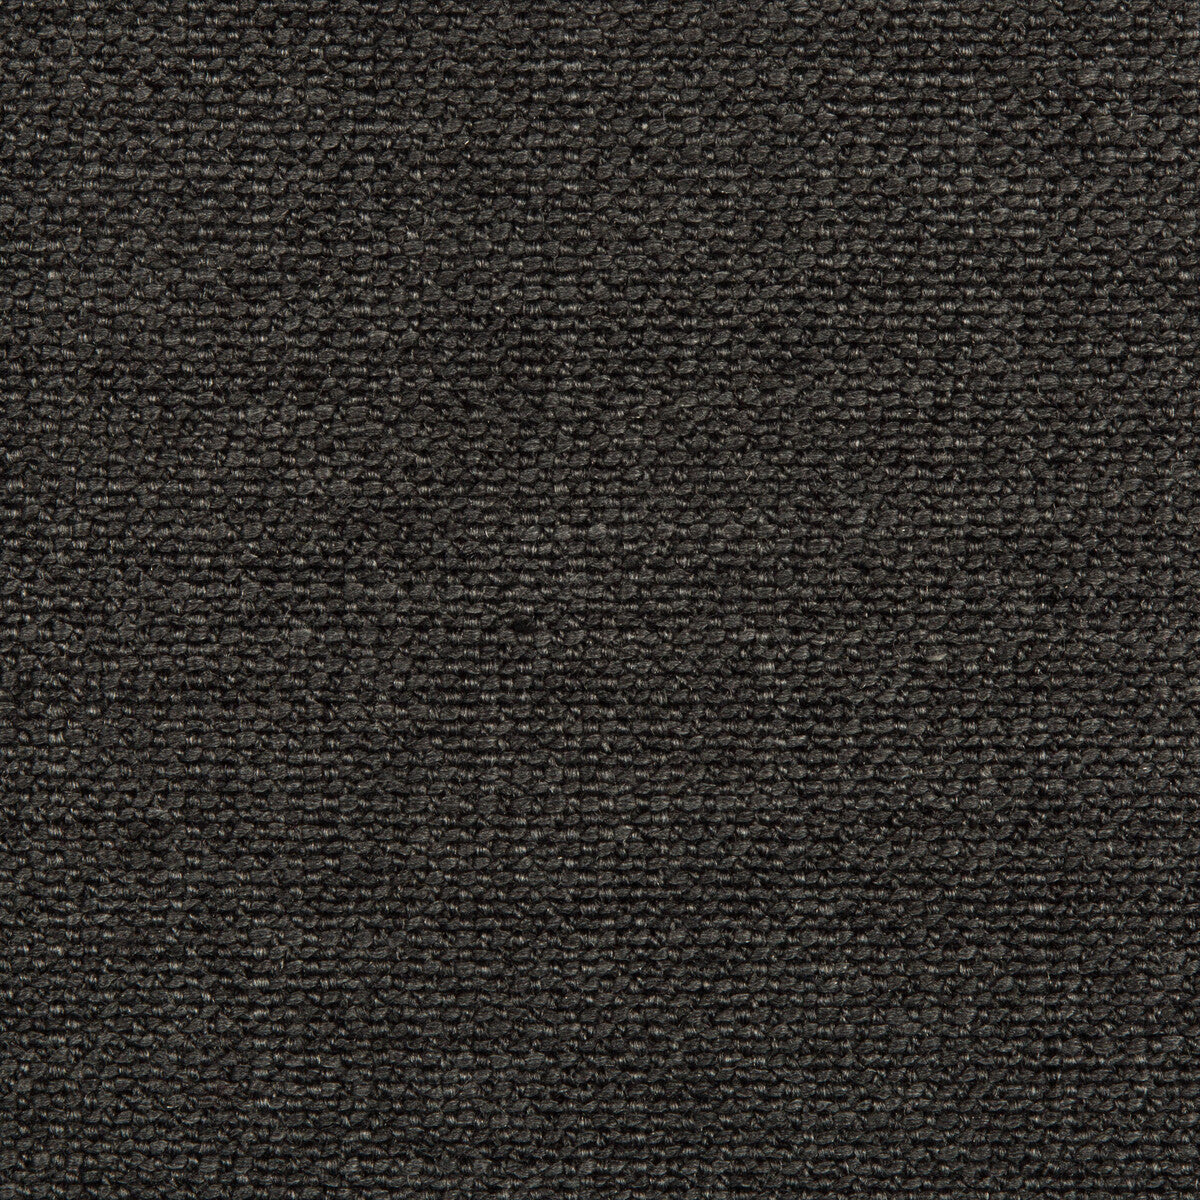 Kravet Smart fabric in 35379-821 color - pattern 35379.821.0 - by Kravet Smart in the Performance Kravetarmor collection